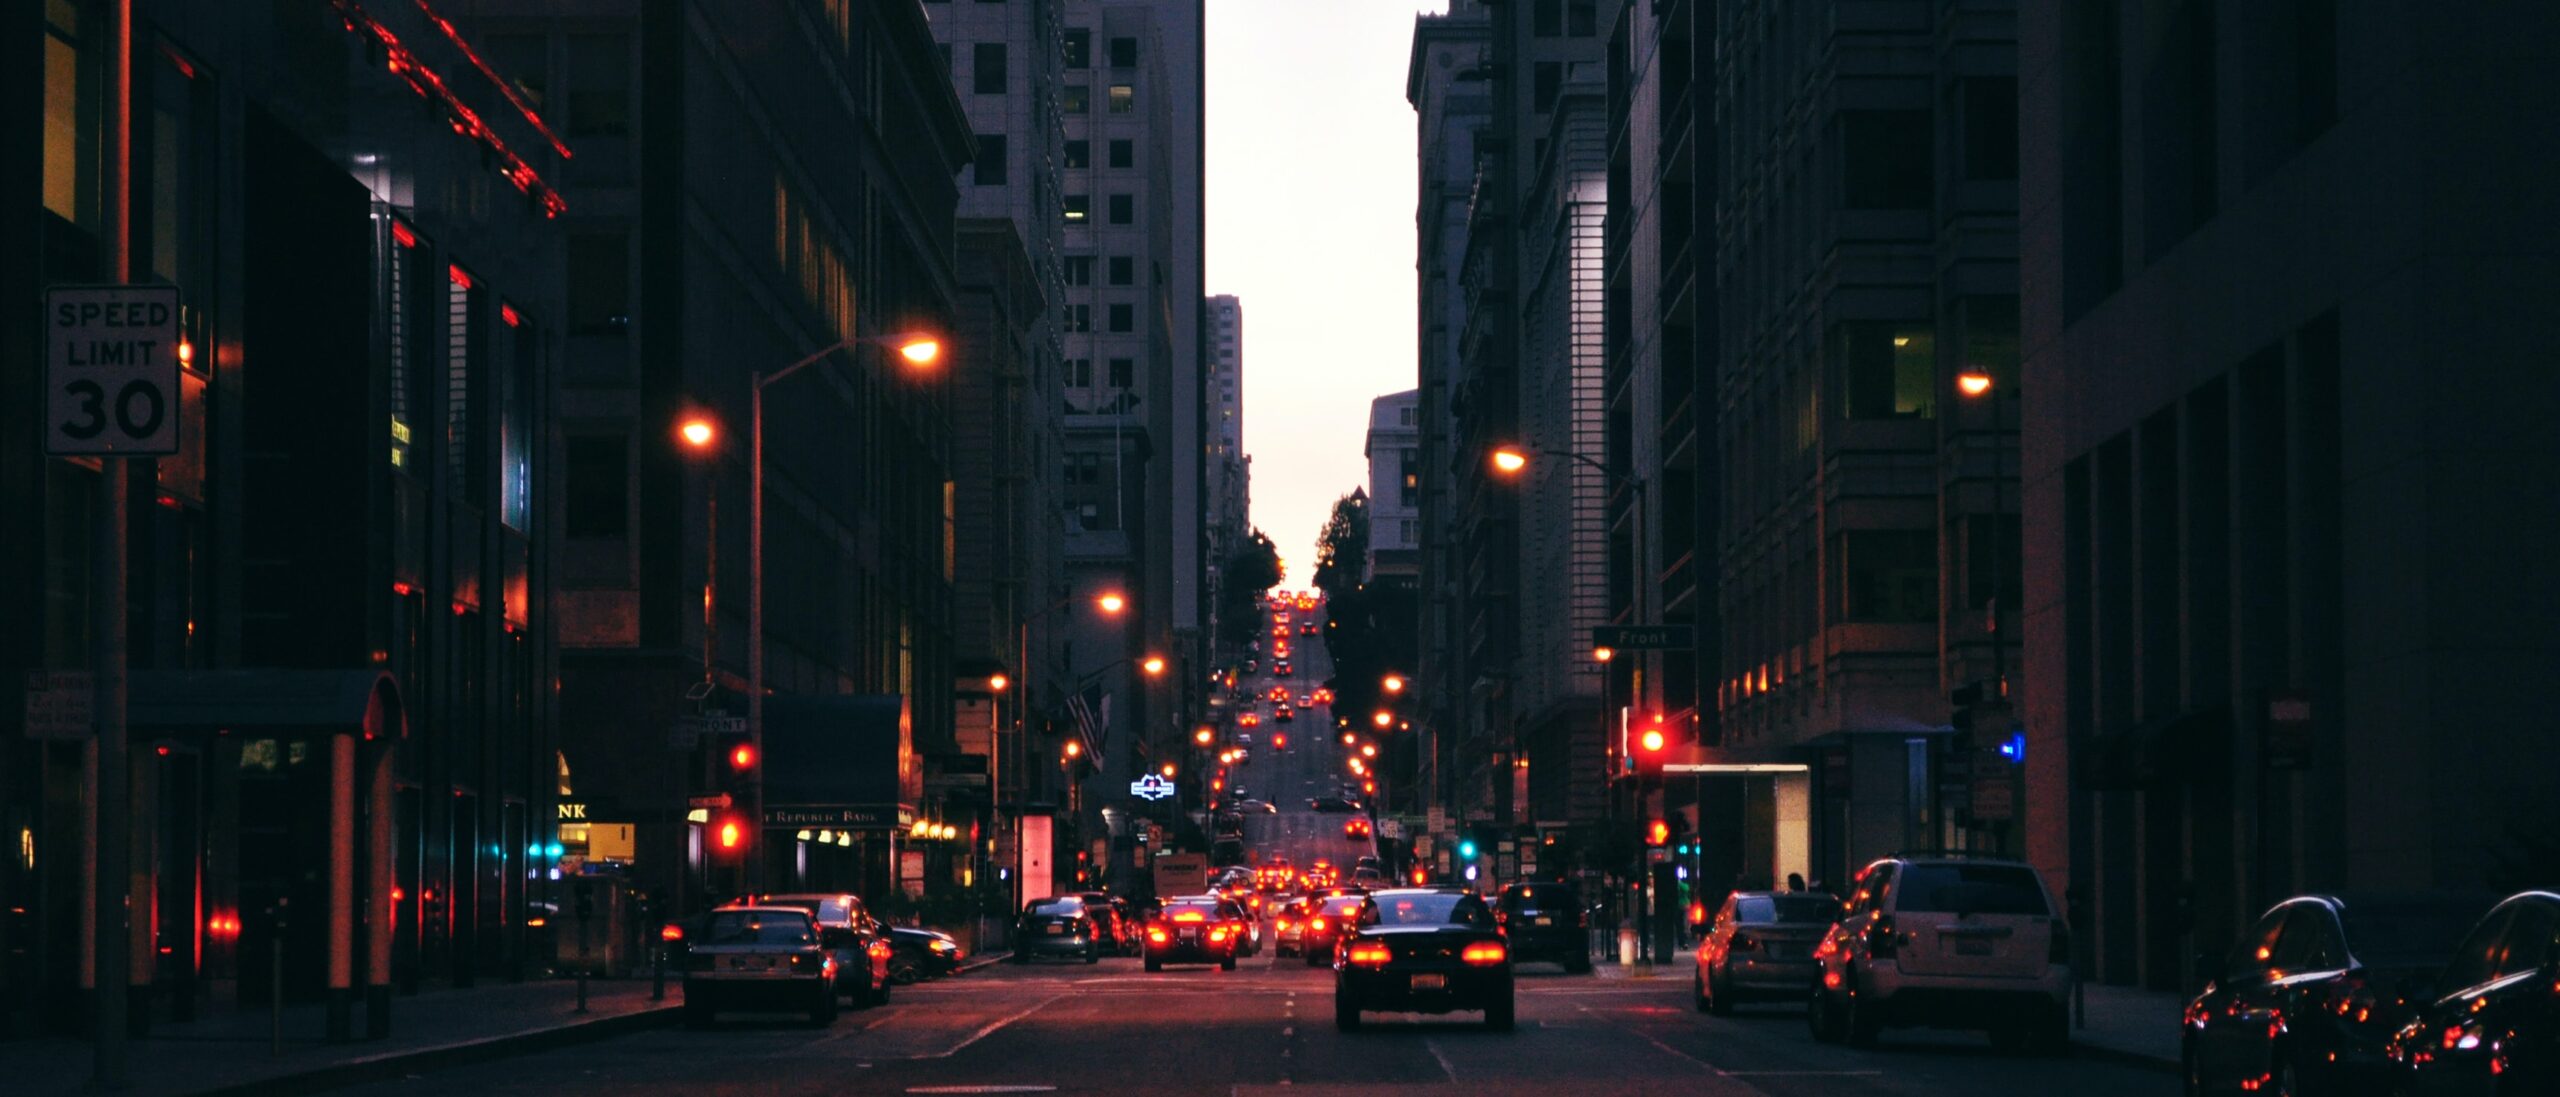 city traffic at night